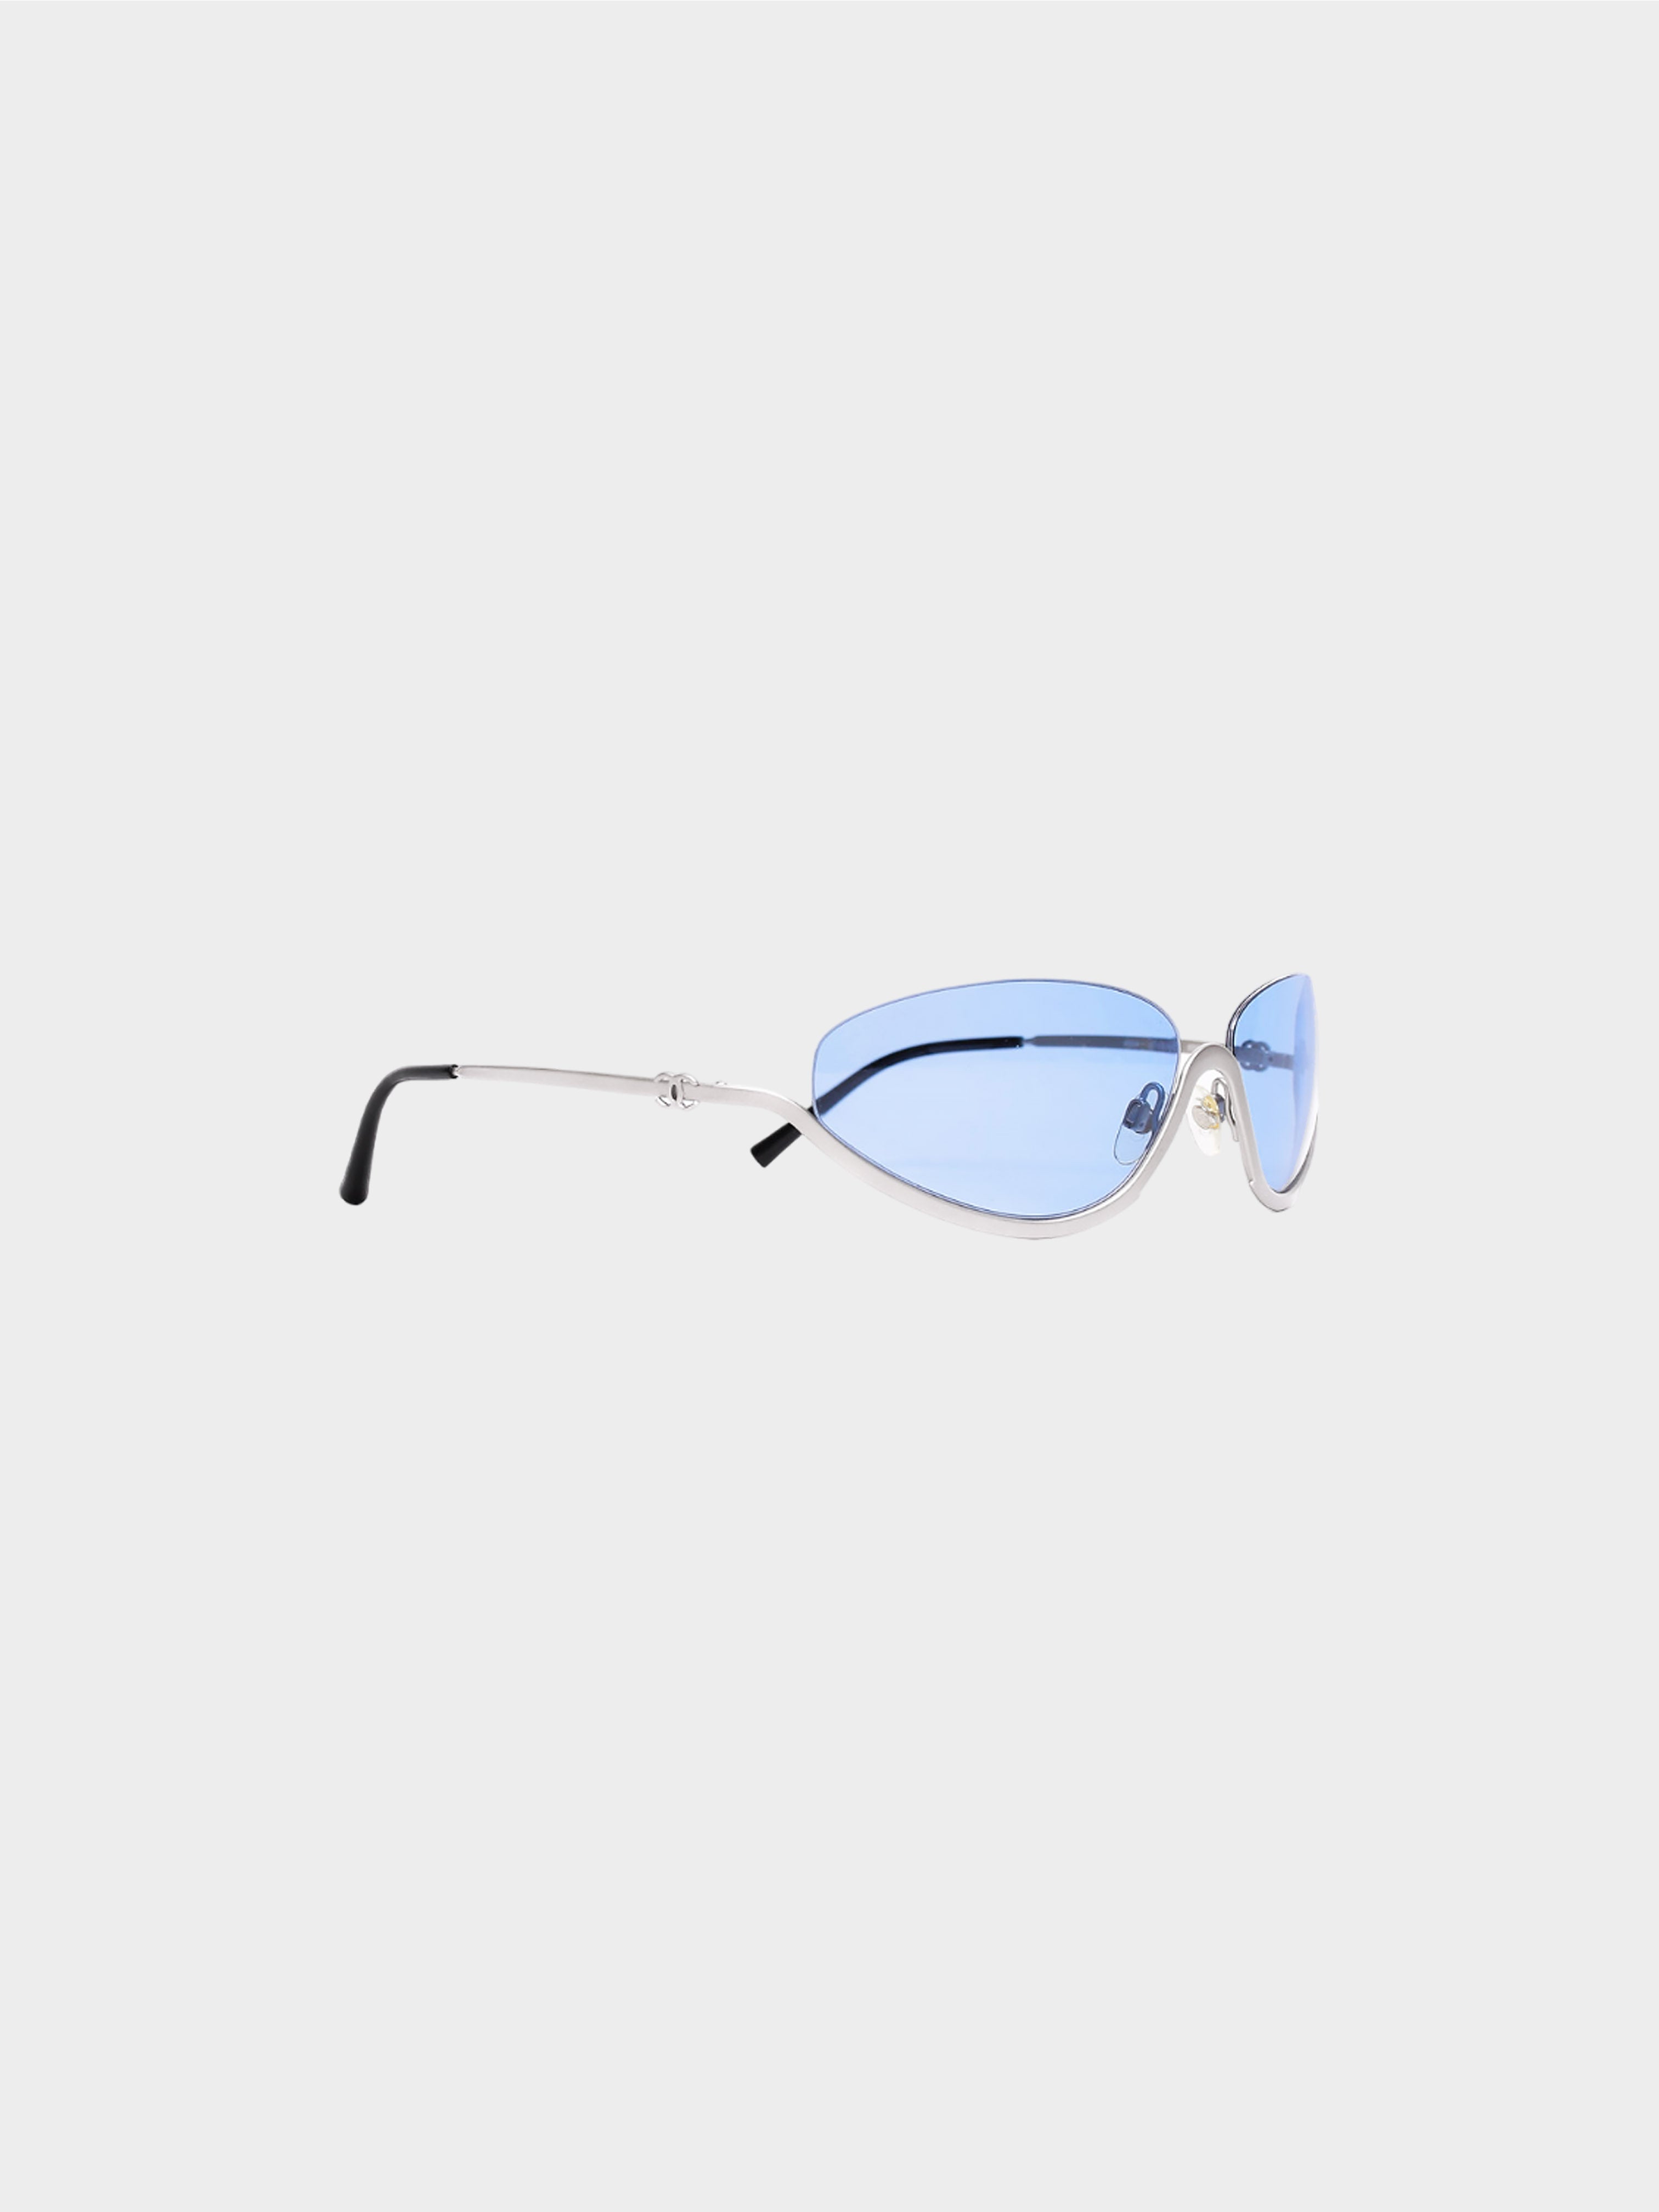 Chanel 2000s Rare Silver Lower Frame Sunglasses